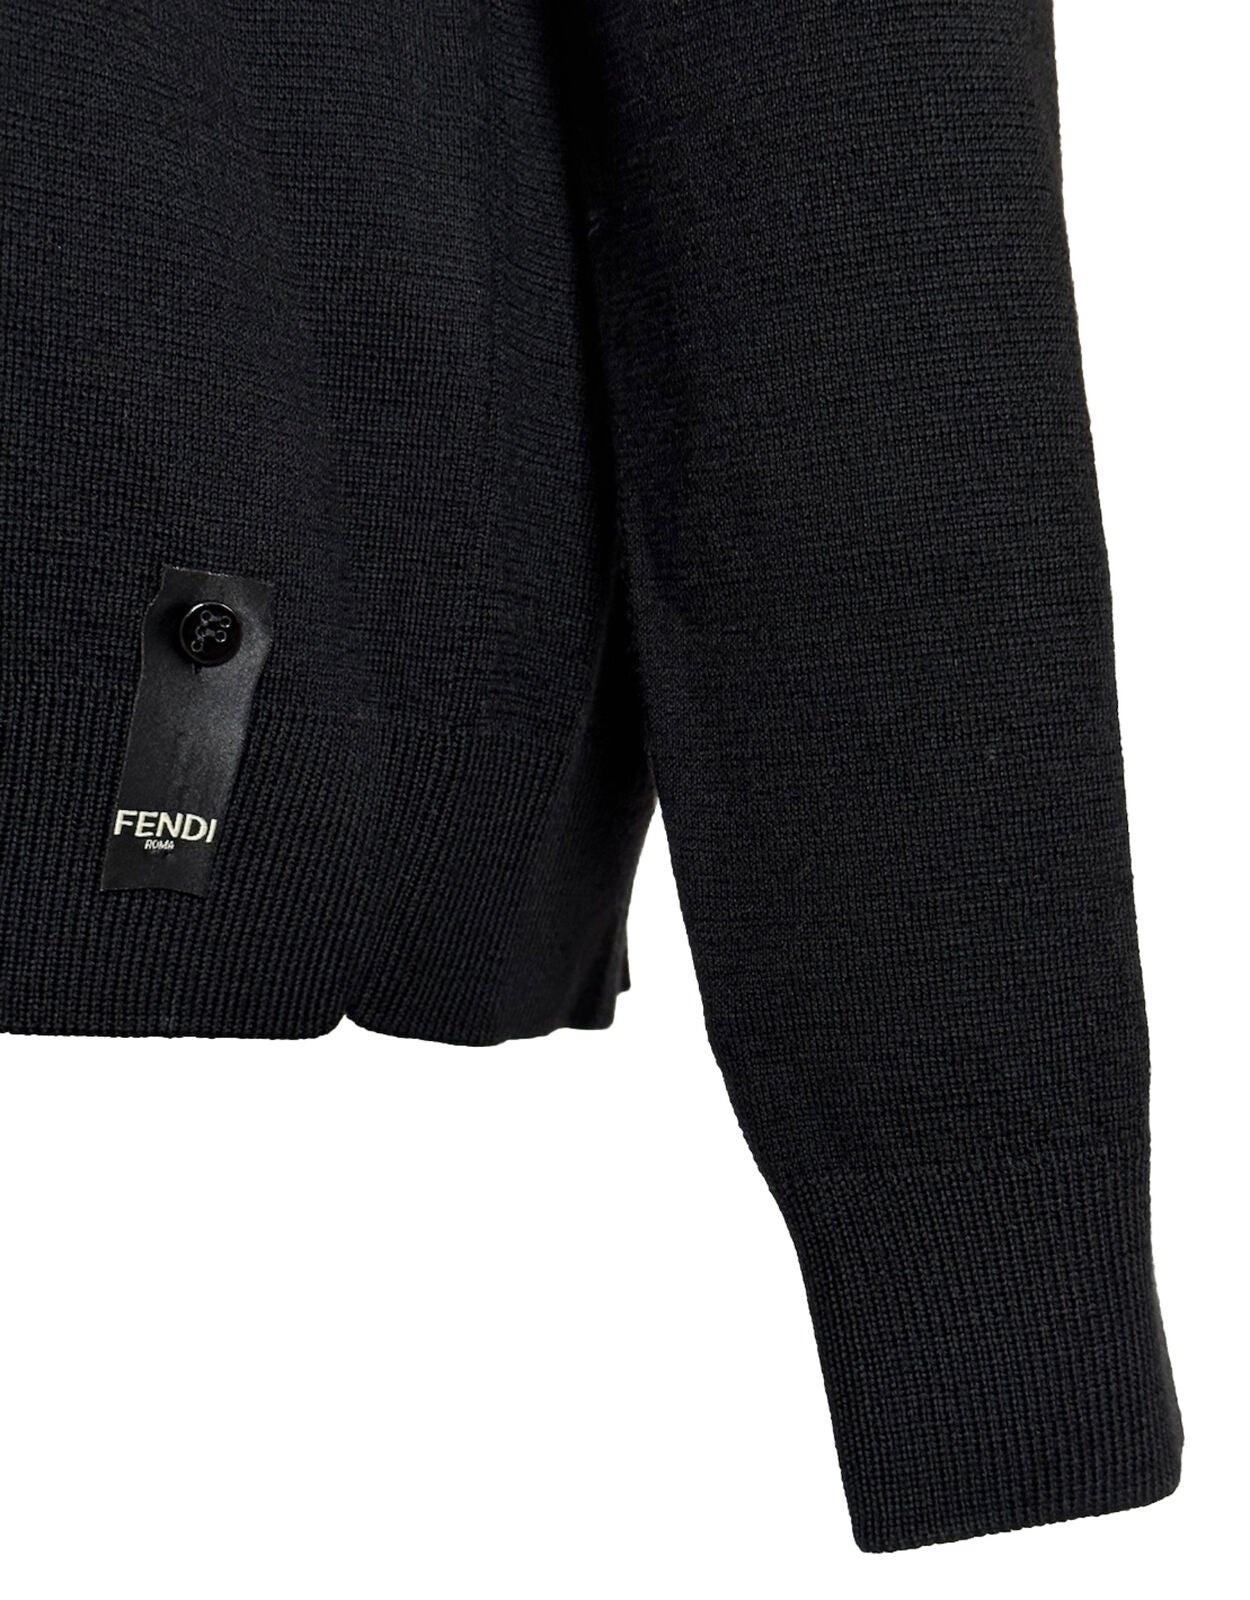 NWT $850 Fendi Wool Knit Sweater Black 54 Euro FZY464 Made in Italy